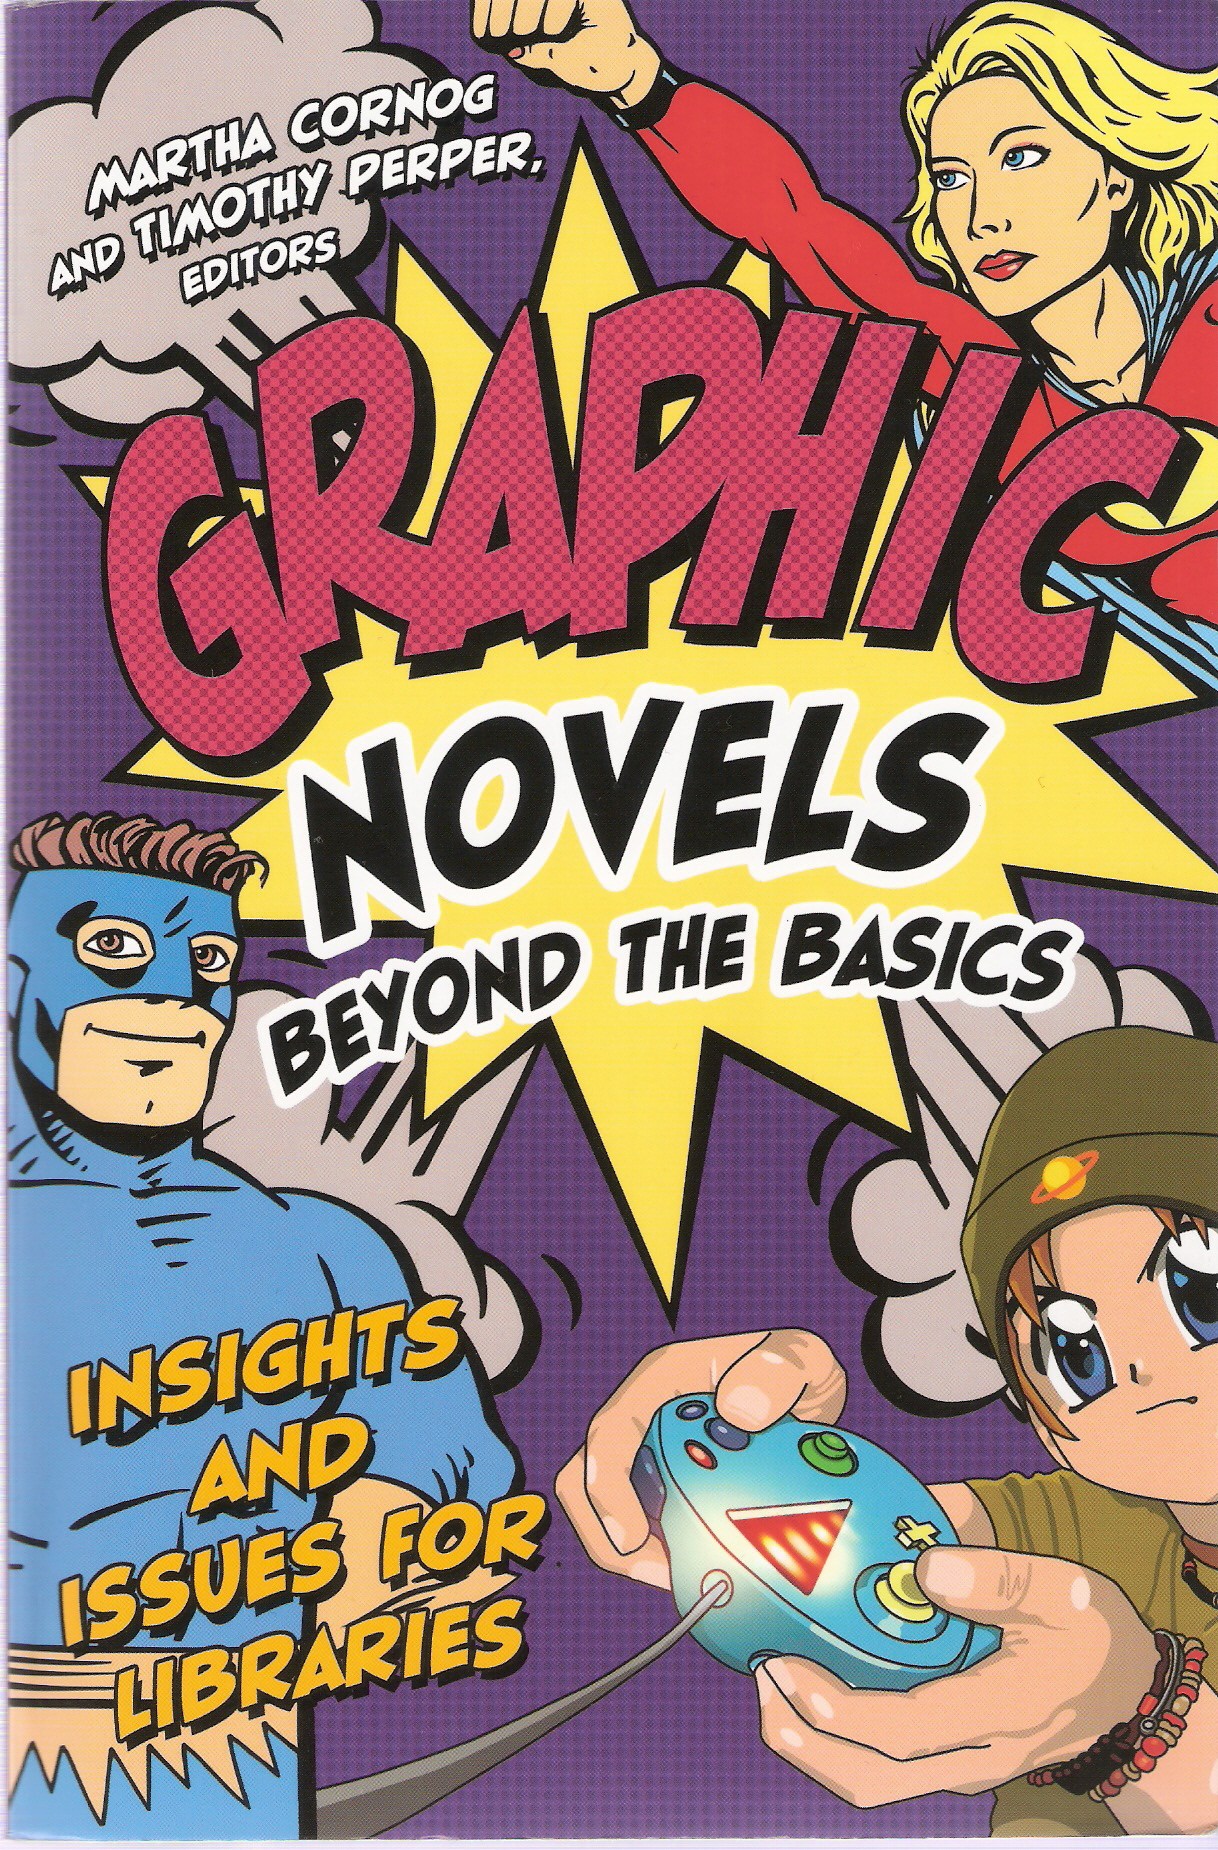 Novel Clipart : Graphic novel clip art clipart collection - Cliparts